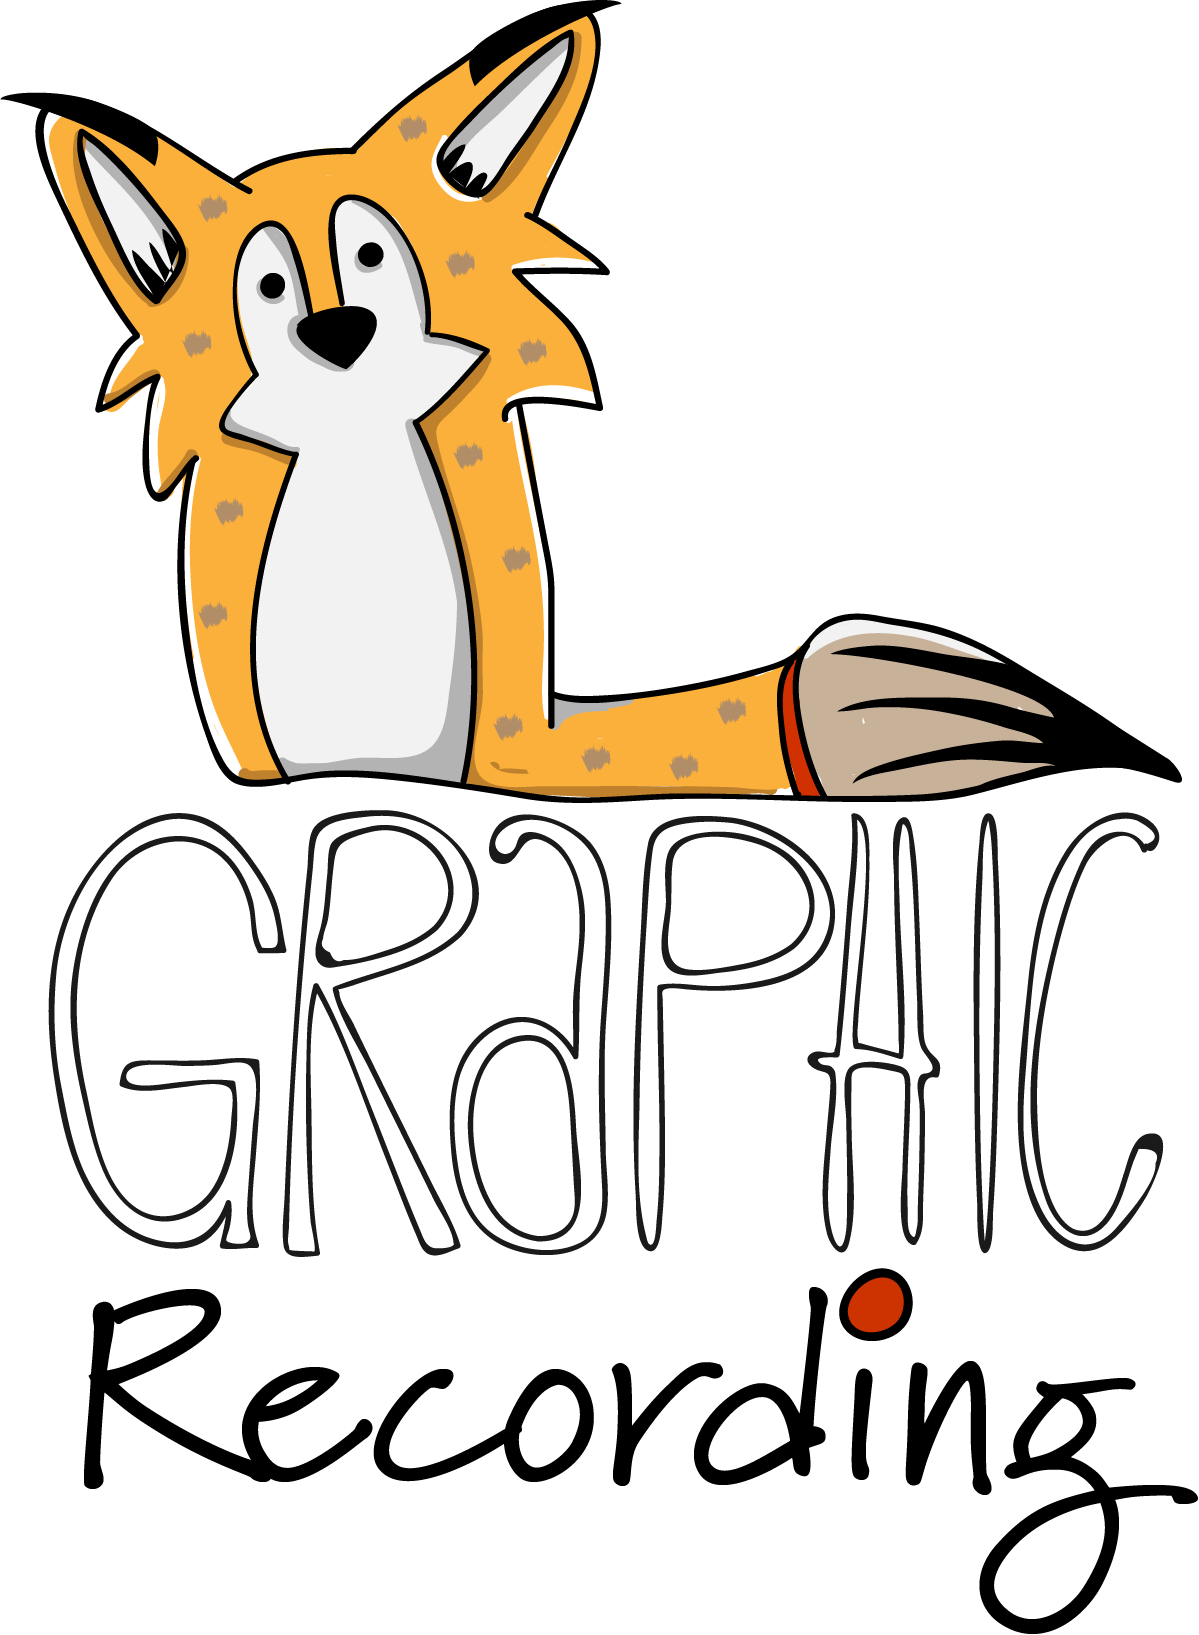 Graphic recording: Logo